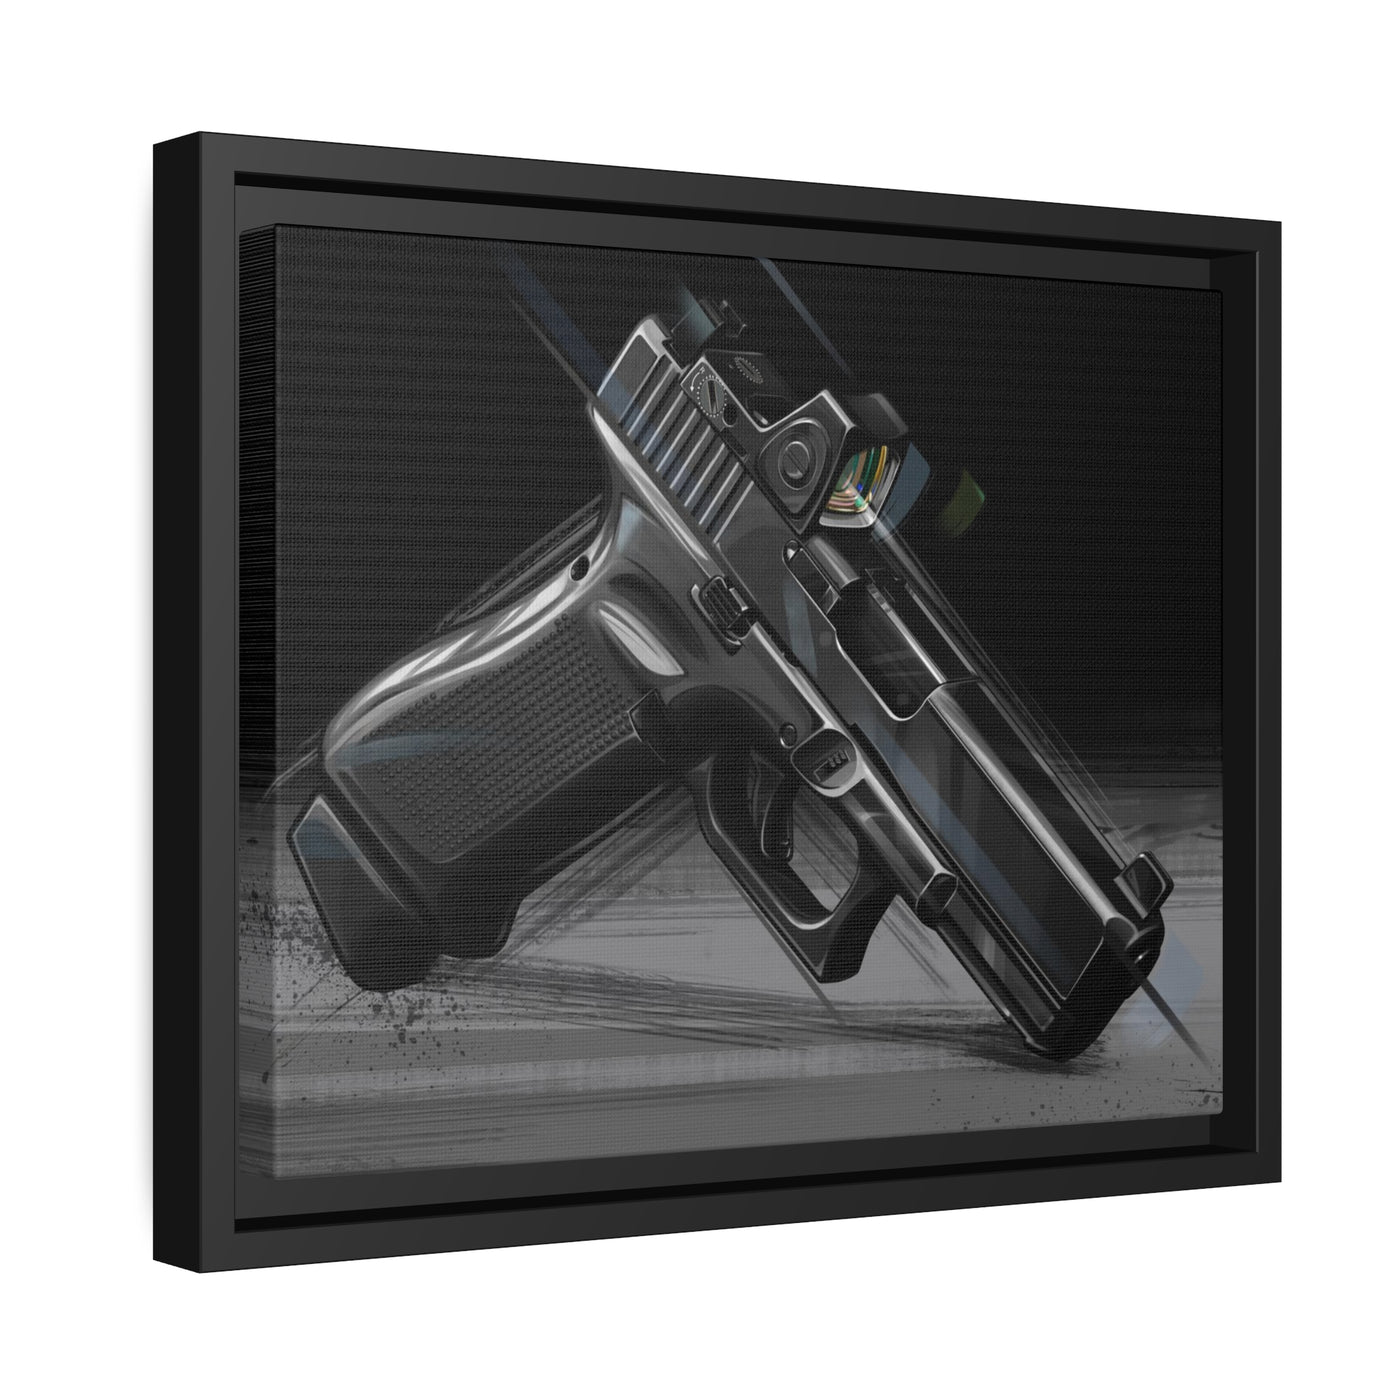 The Last Resort - OG Black Poly Pistol Painting - Black Framed Wrapped Canvas - Value Collection